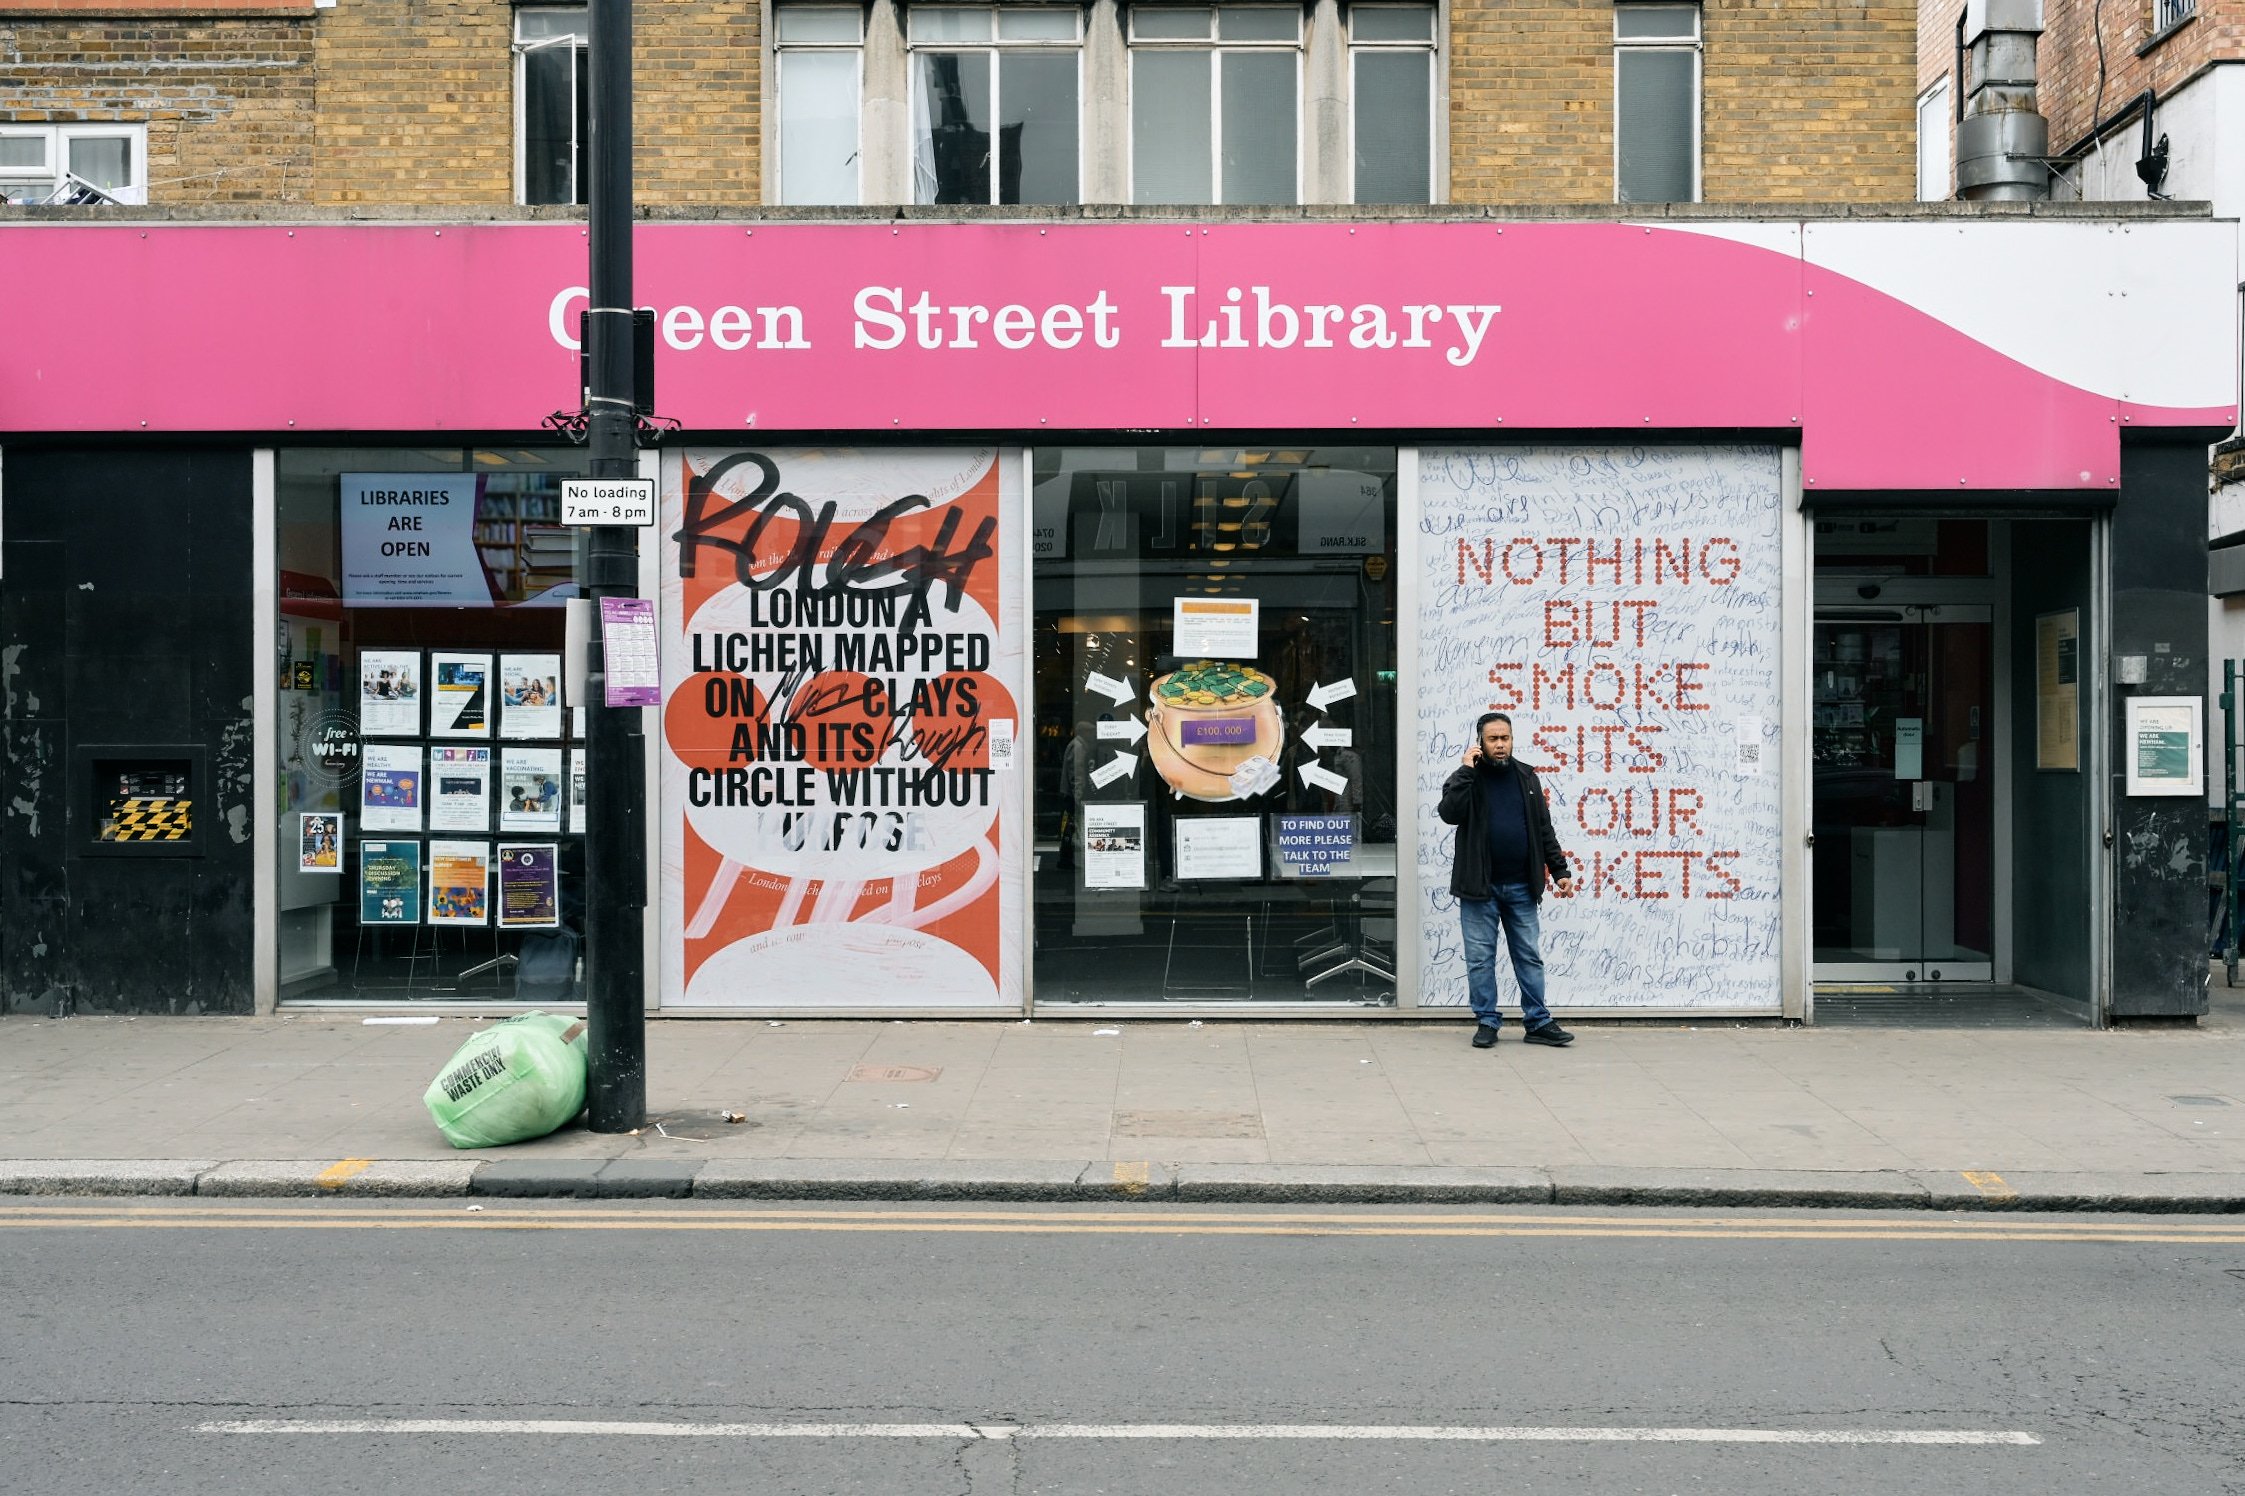 Green Street Library2.jpg